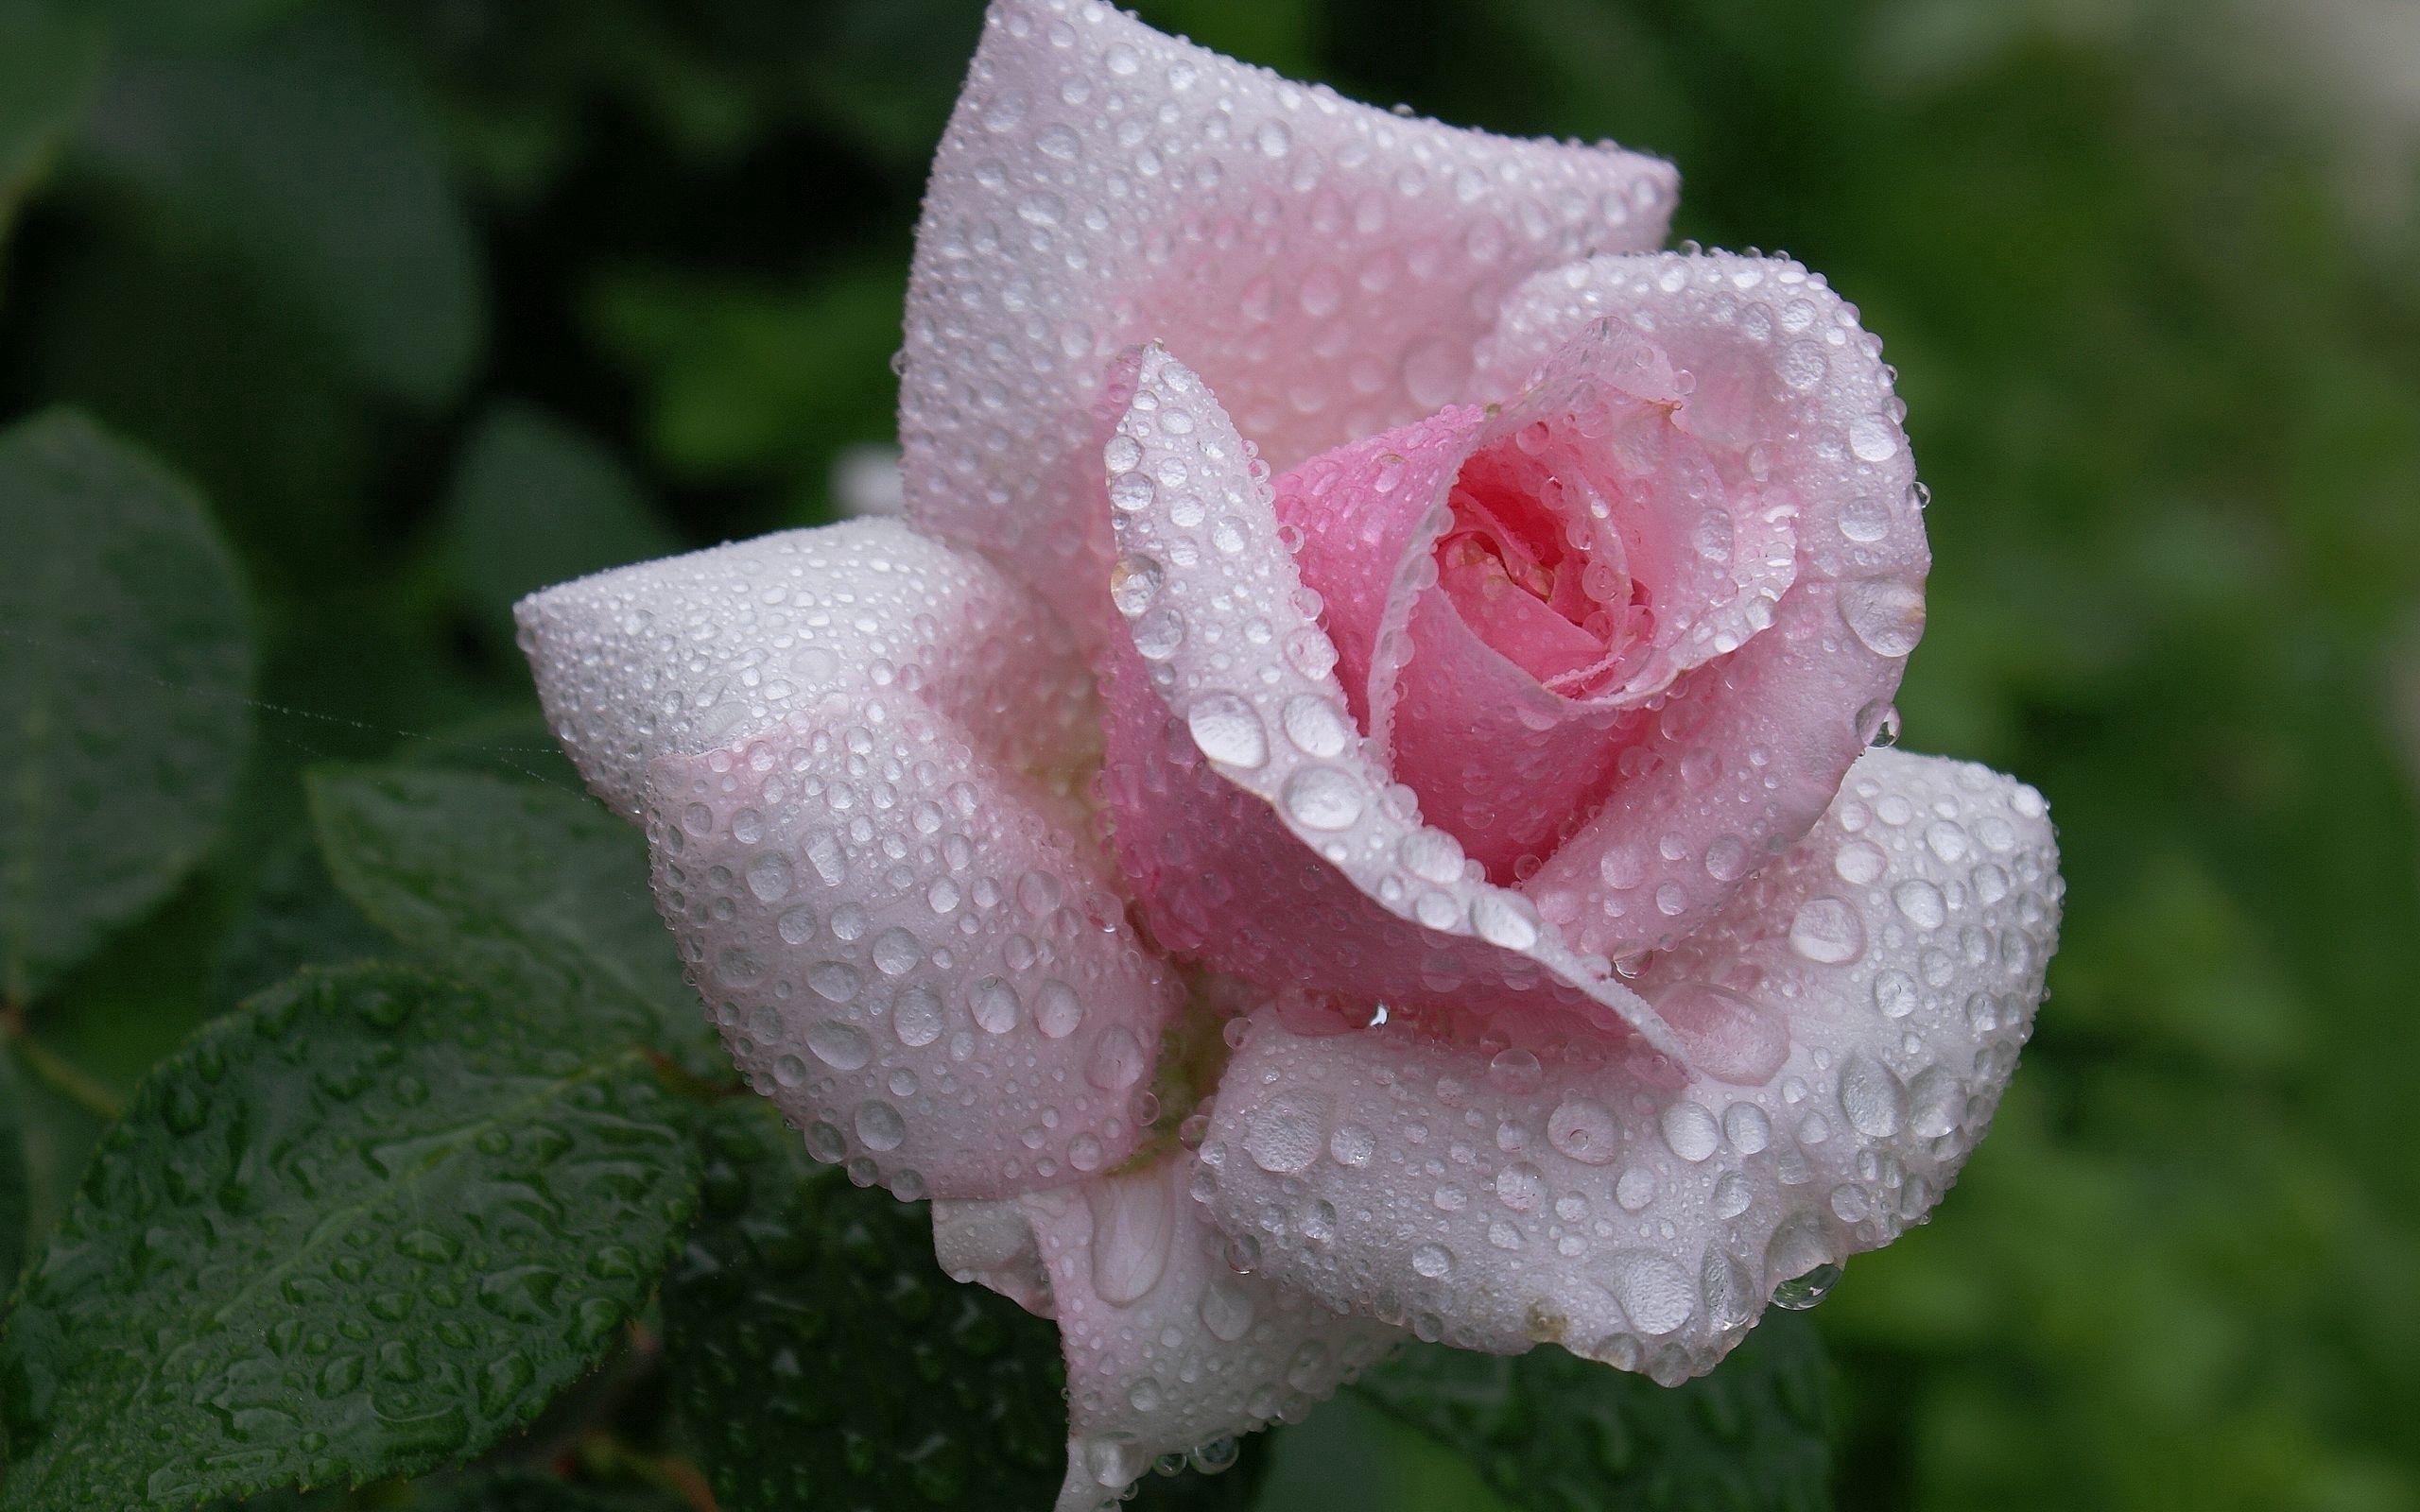 rose flower, bud, flowers, leaves, rain, drops, flower, rose, handsomely, it's beautiful